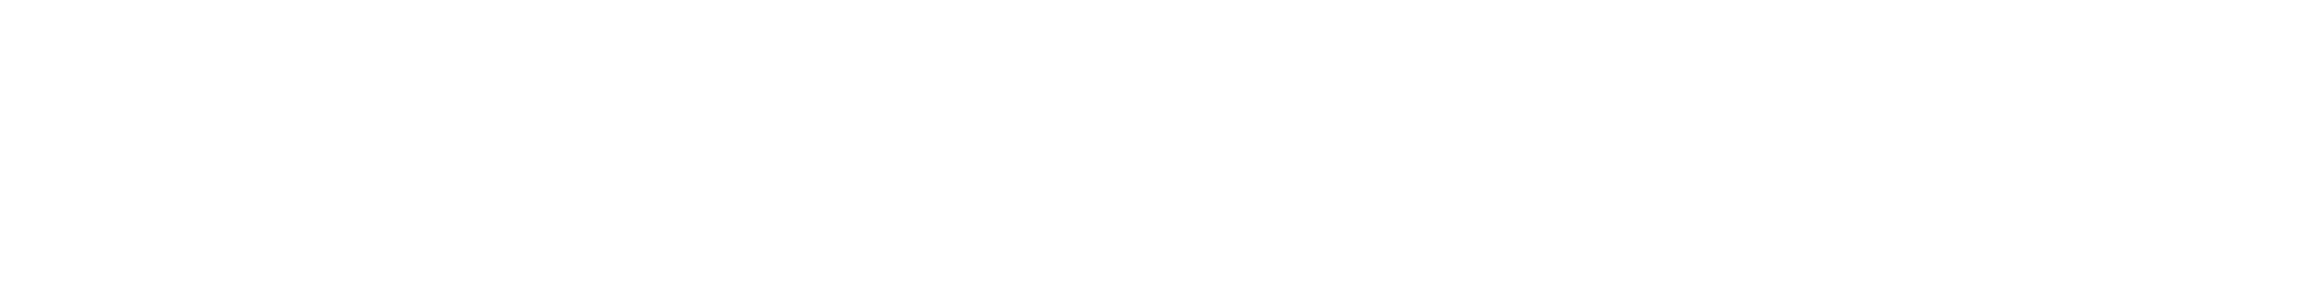 troys concrete pumping logo